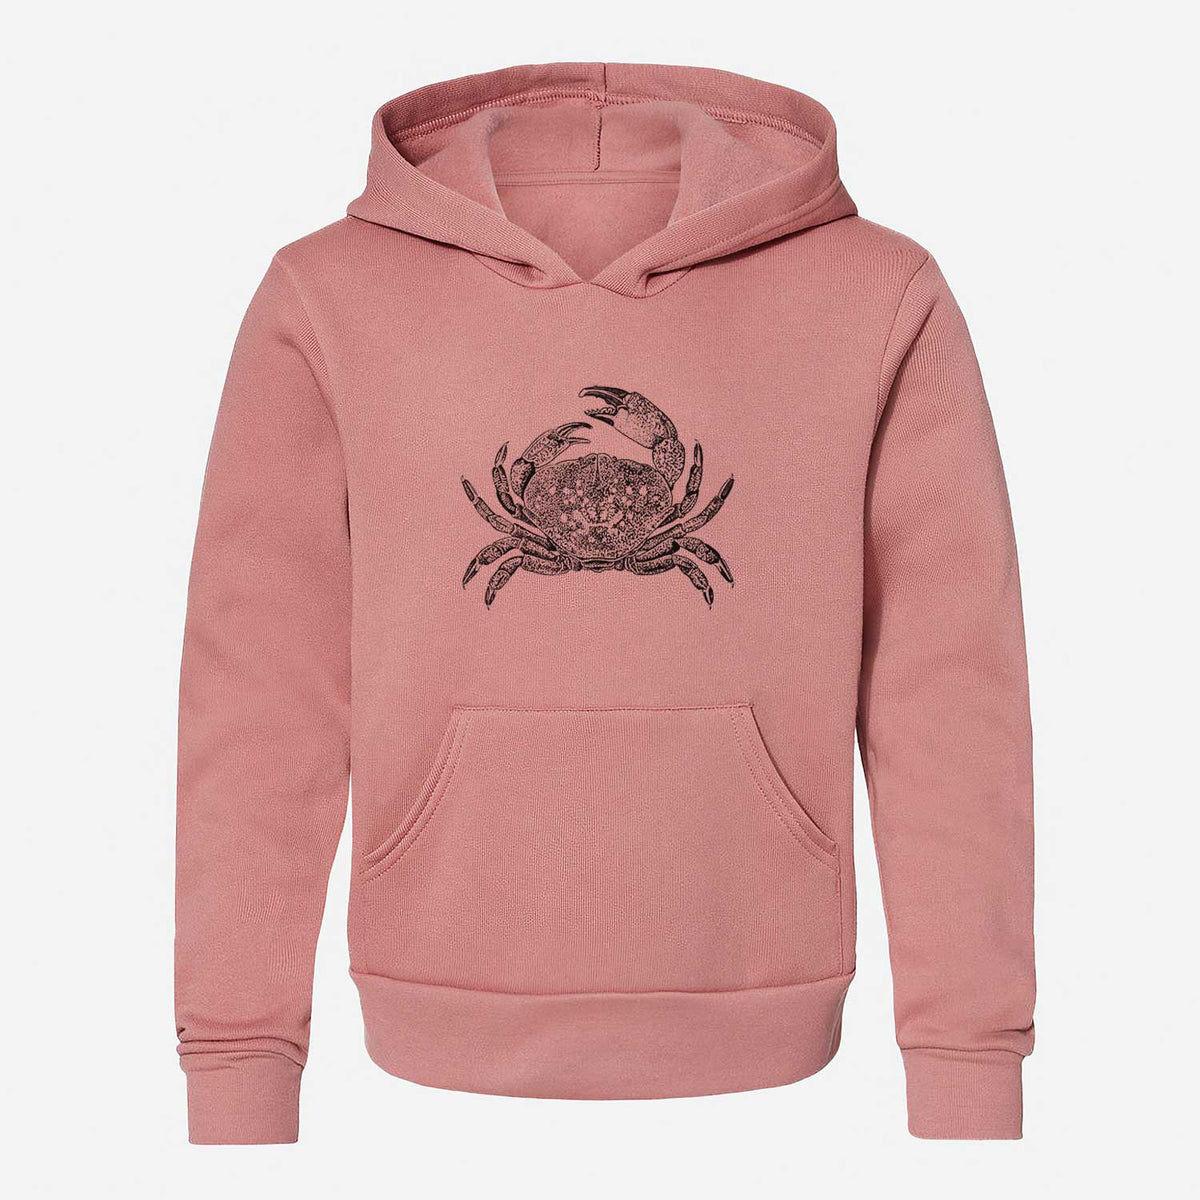 Dungeness Crab - Youth Hoodie Sweatshirt